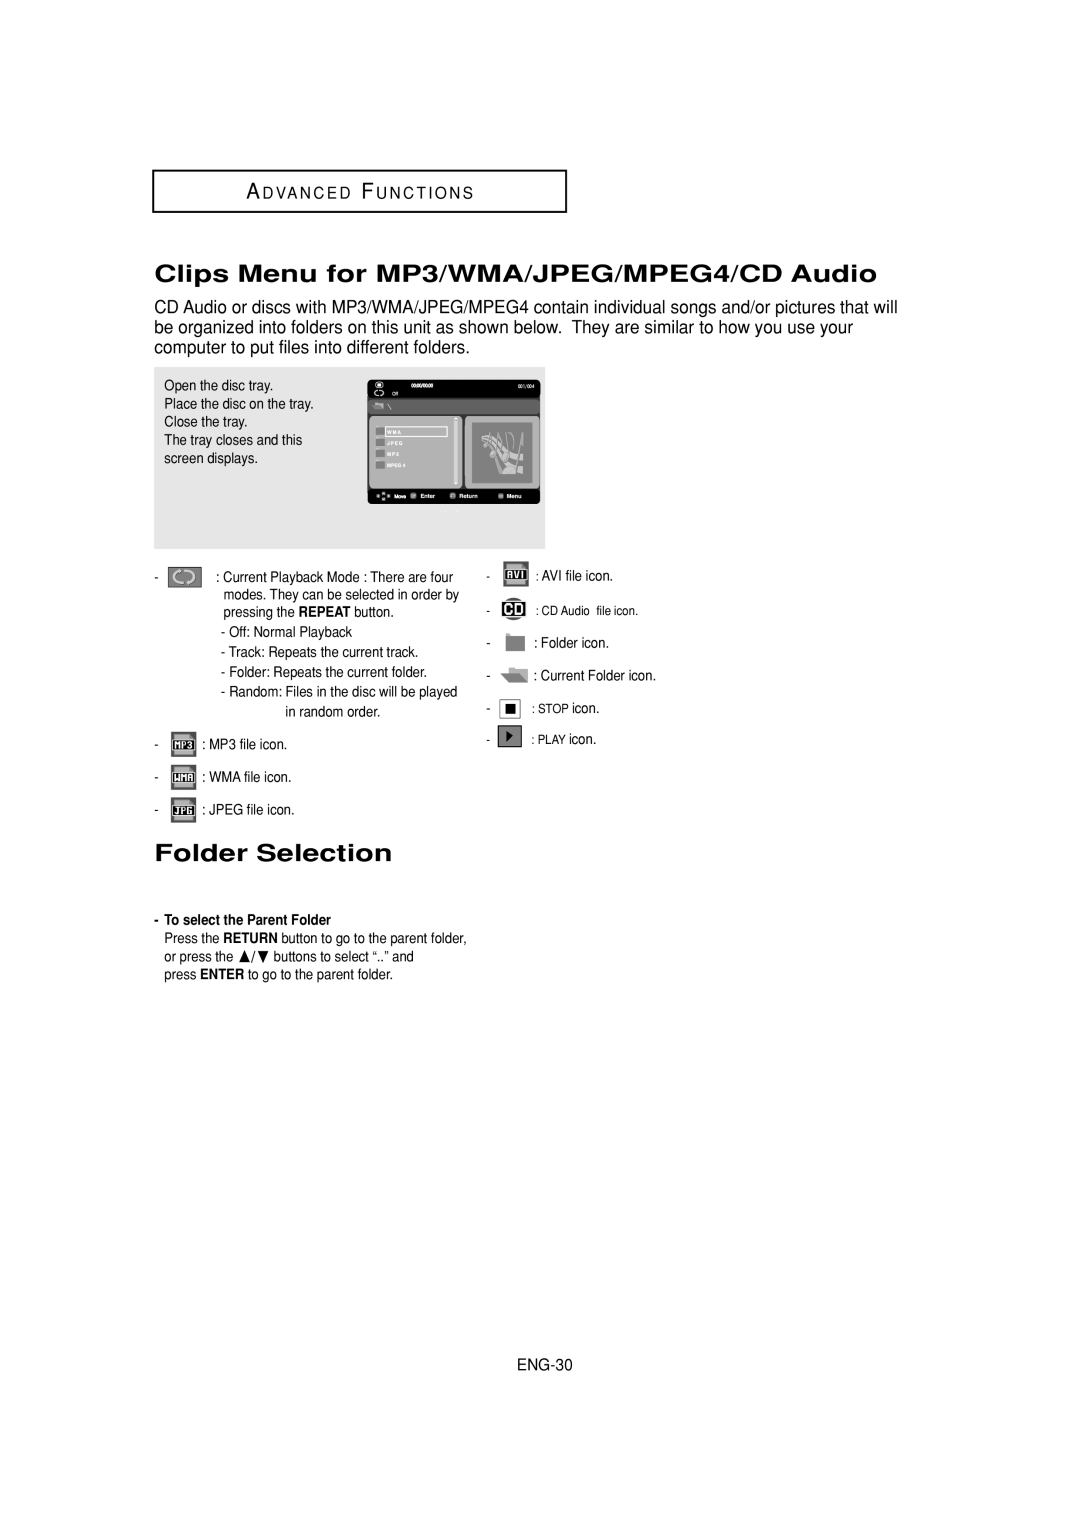 Samsung DVD-P181 Clips Menu for MP3/WMA/JPEG/MPEG4/CD Audio, Folder Selection, A D Va N C E D F U N C T I O N S, ENG-30 